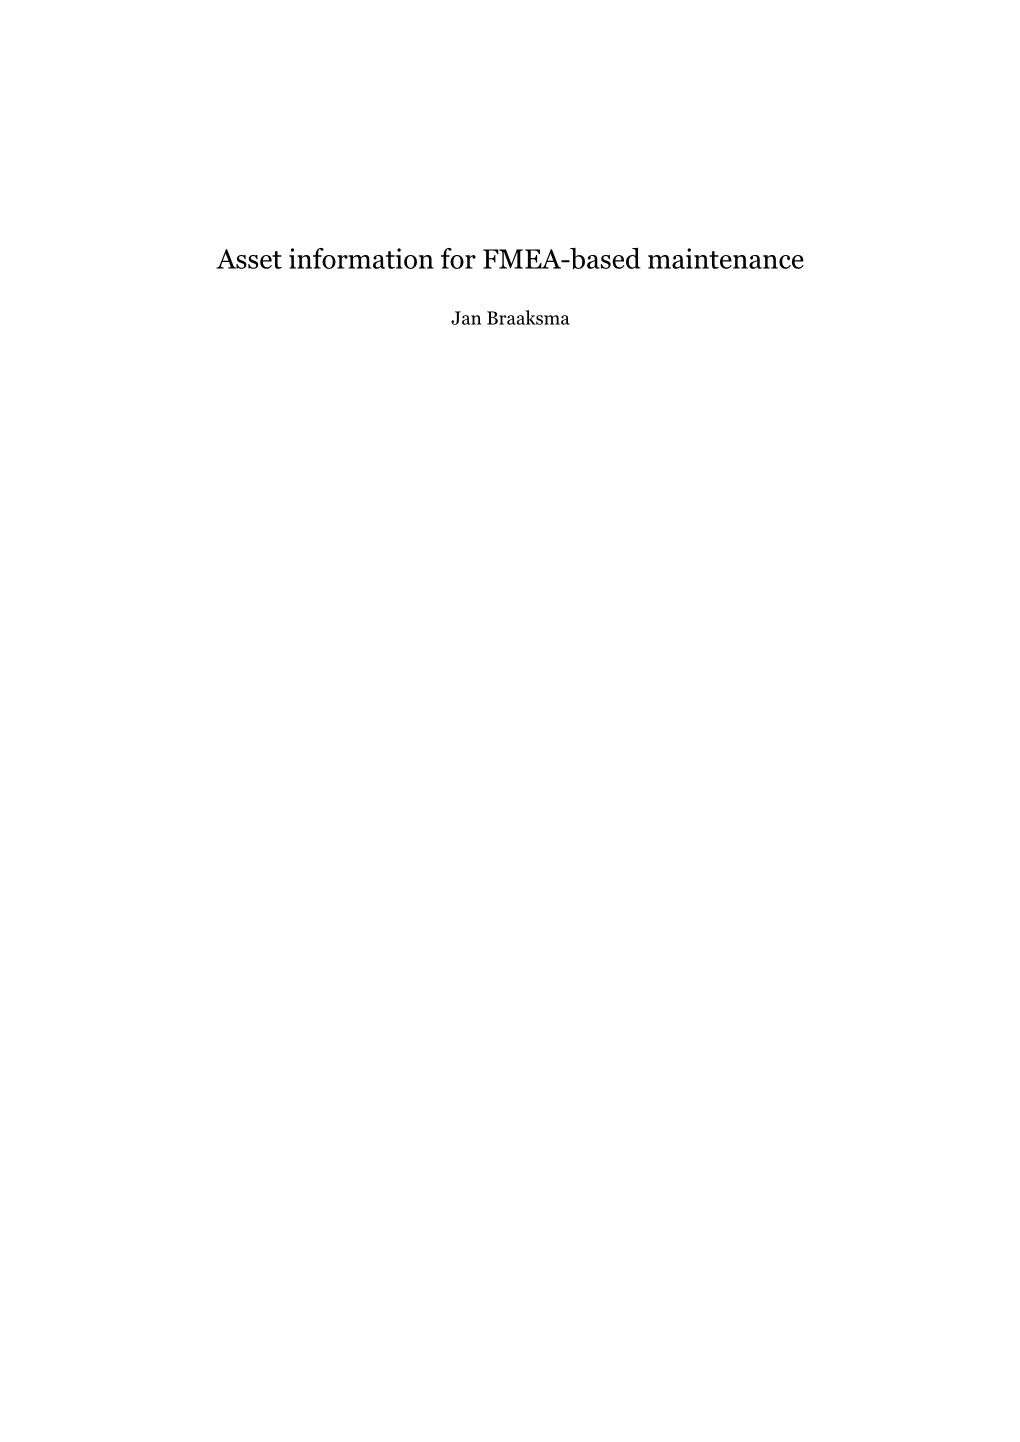 Asset Information for FMEA-Based Maintenance